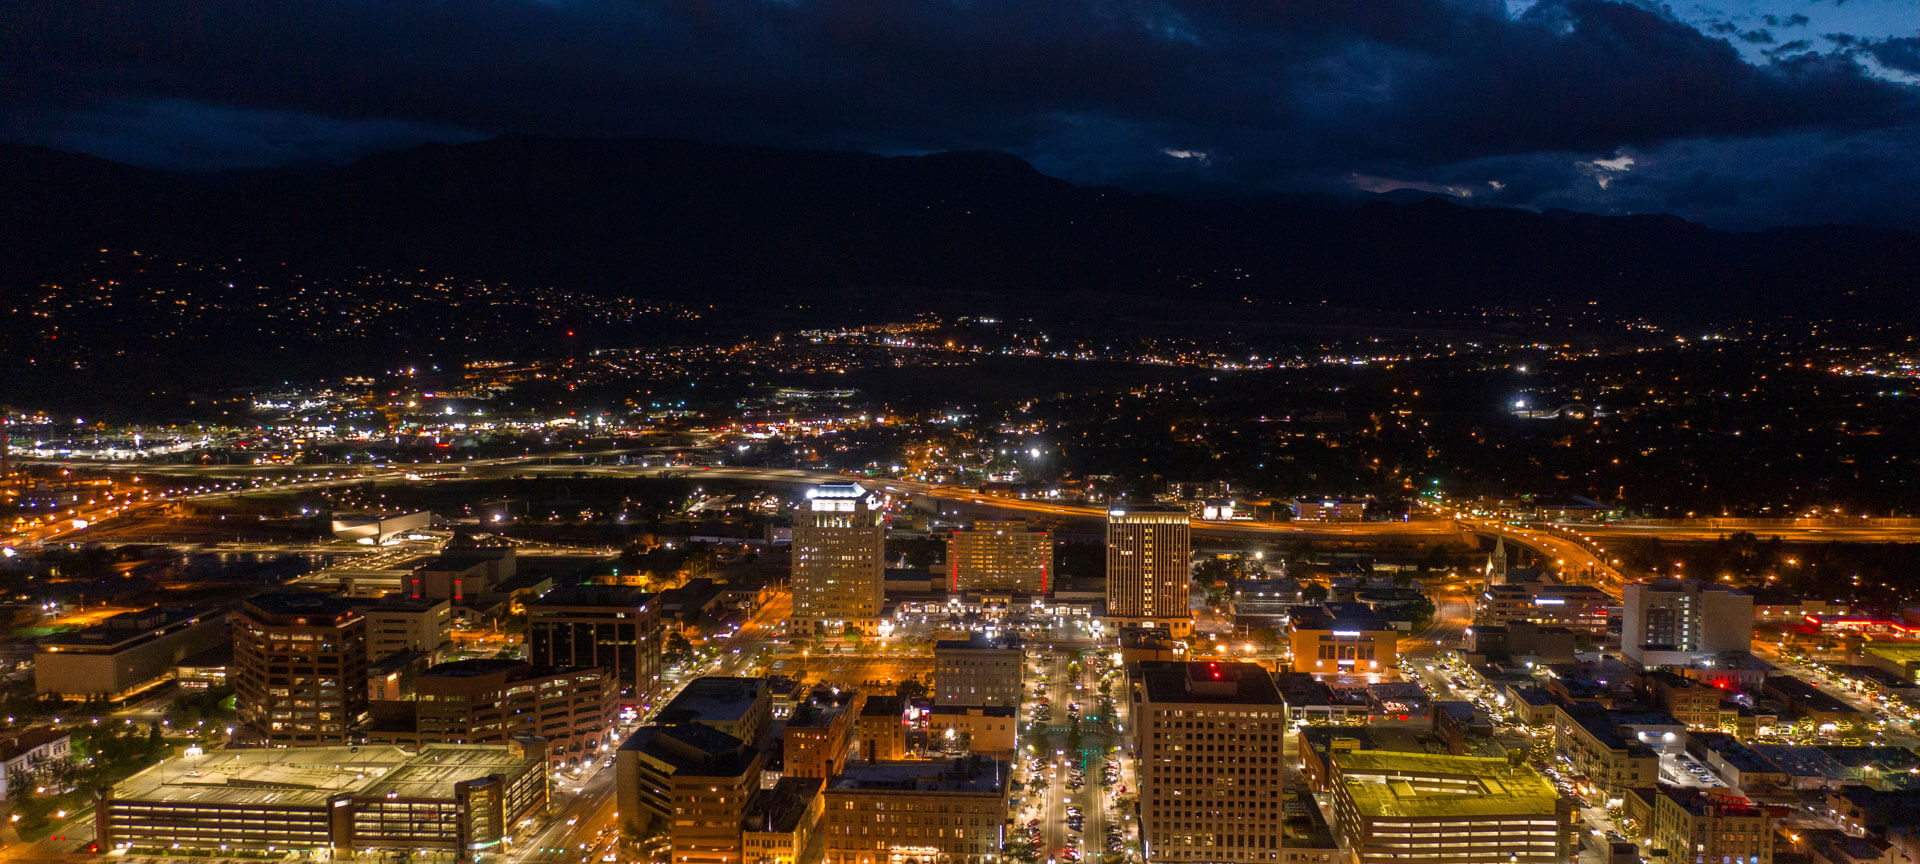 Aerial view of Colorado city at night